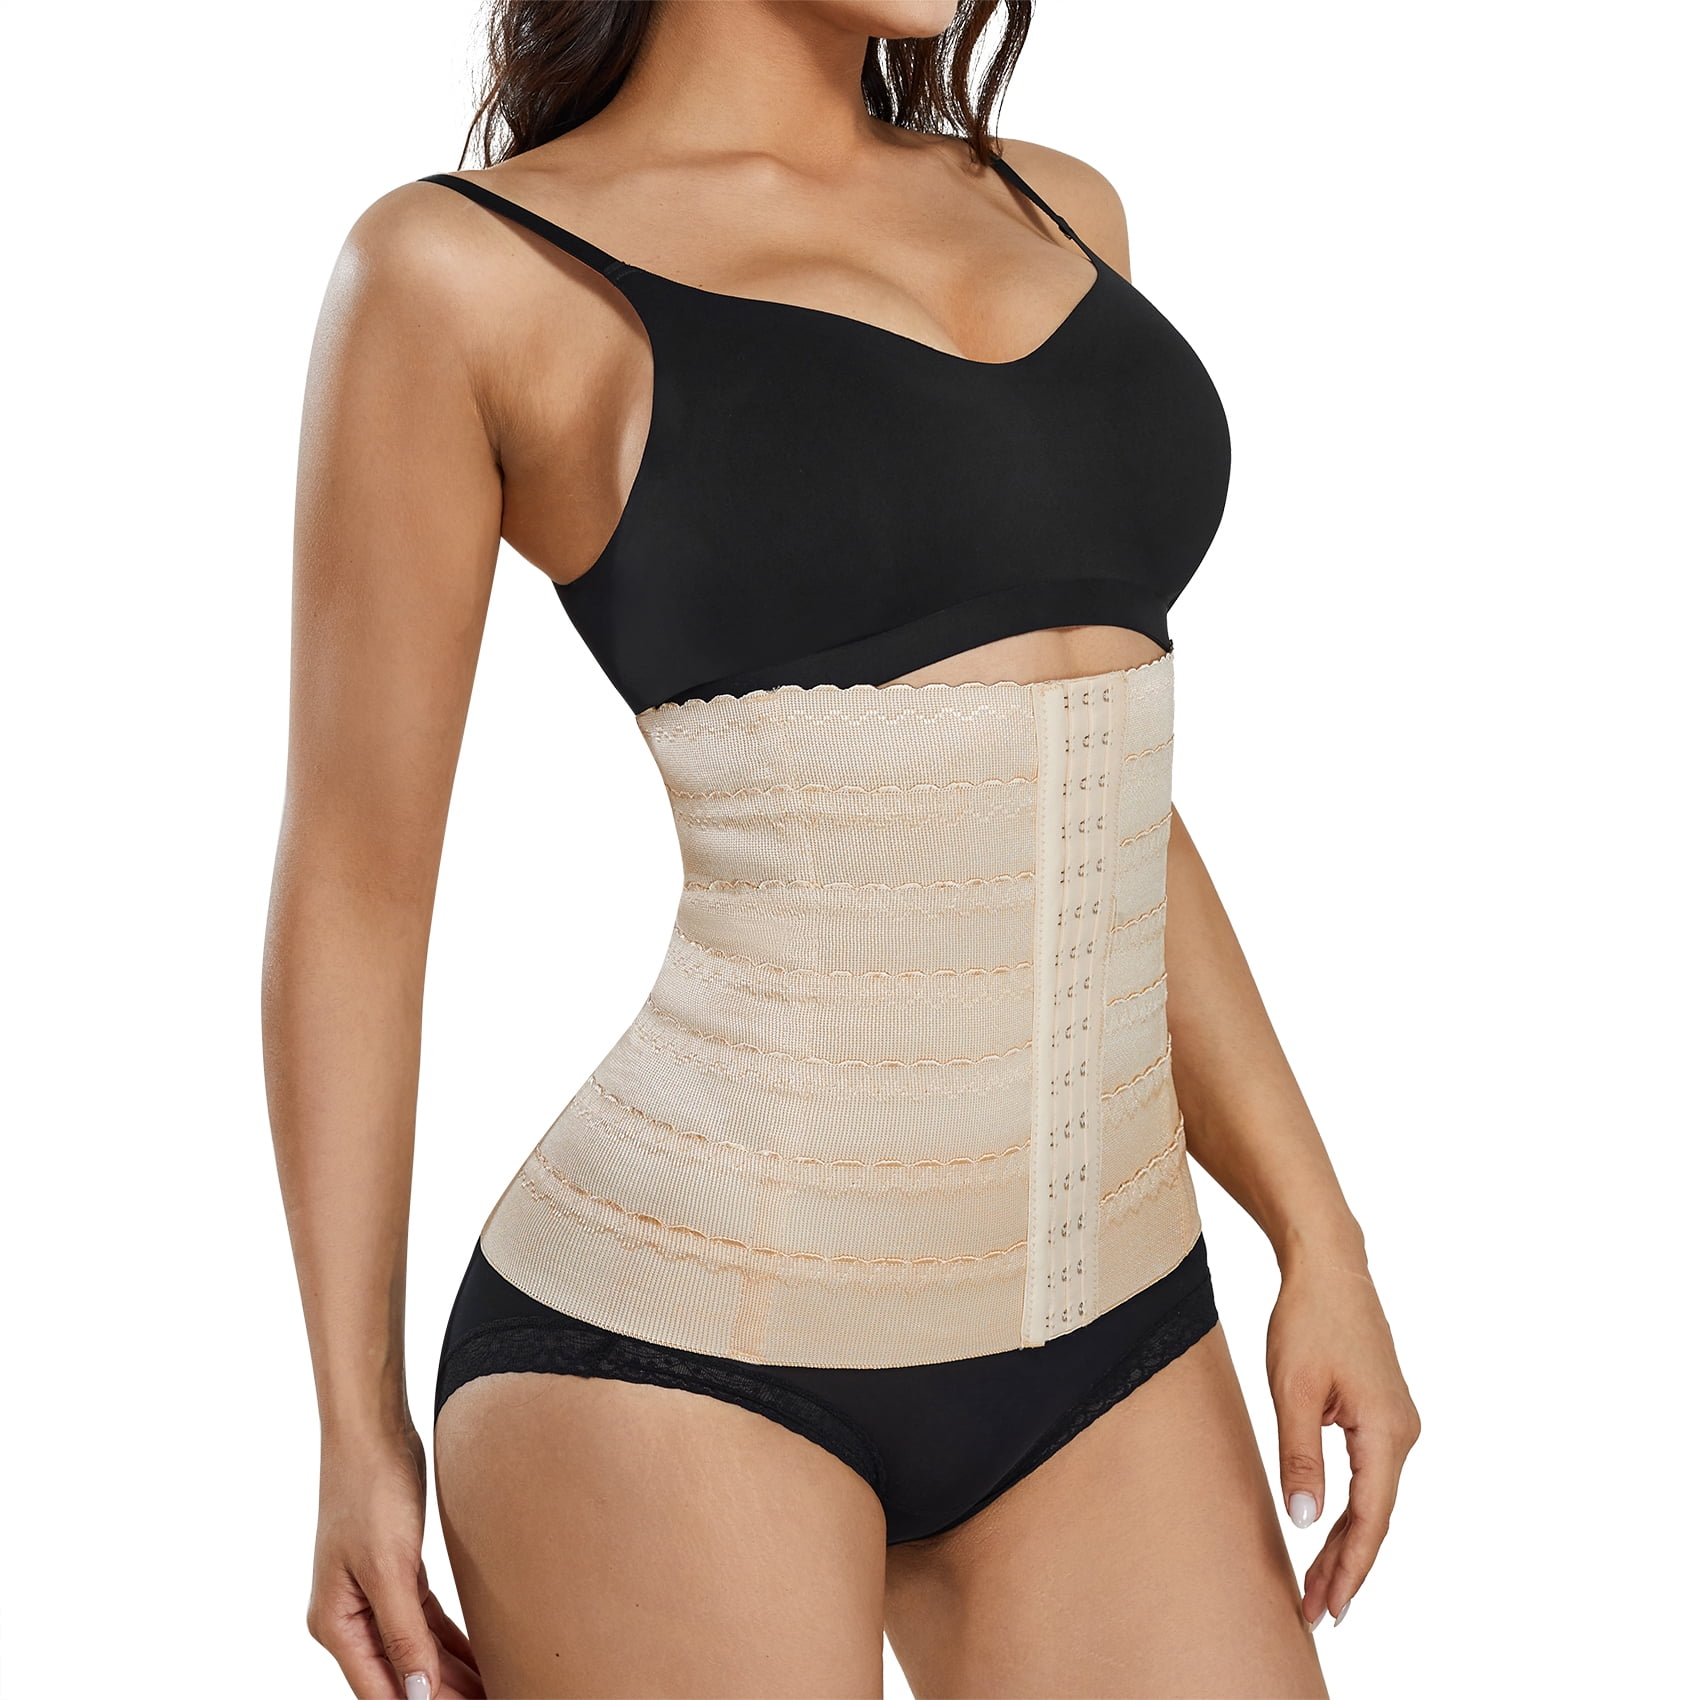 Womens Waist Trainer Corset Tummy Control Band Steel Boned Underwear Compression Slimming Body Shaper